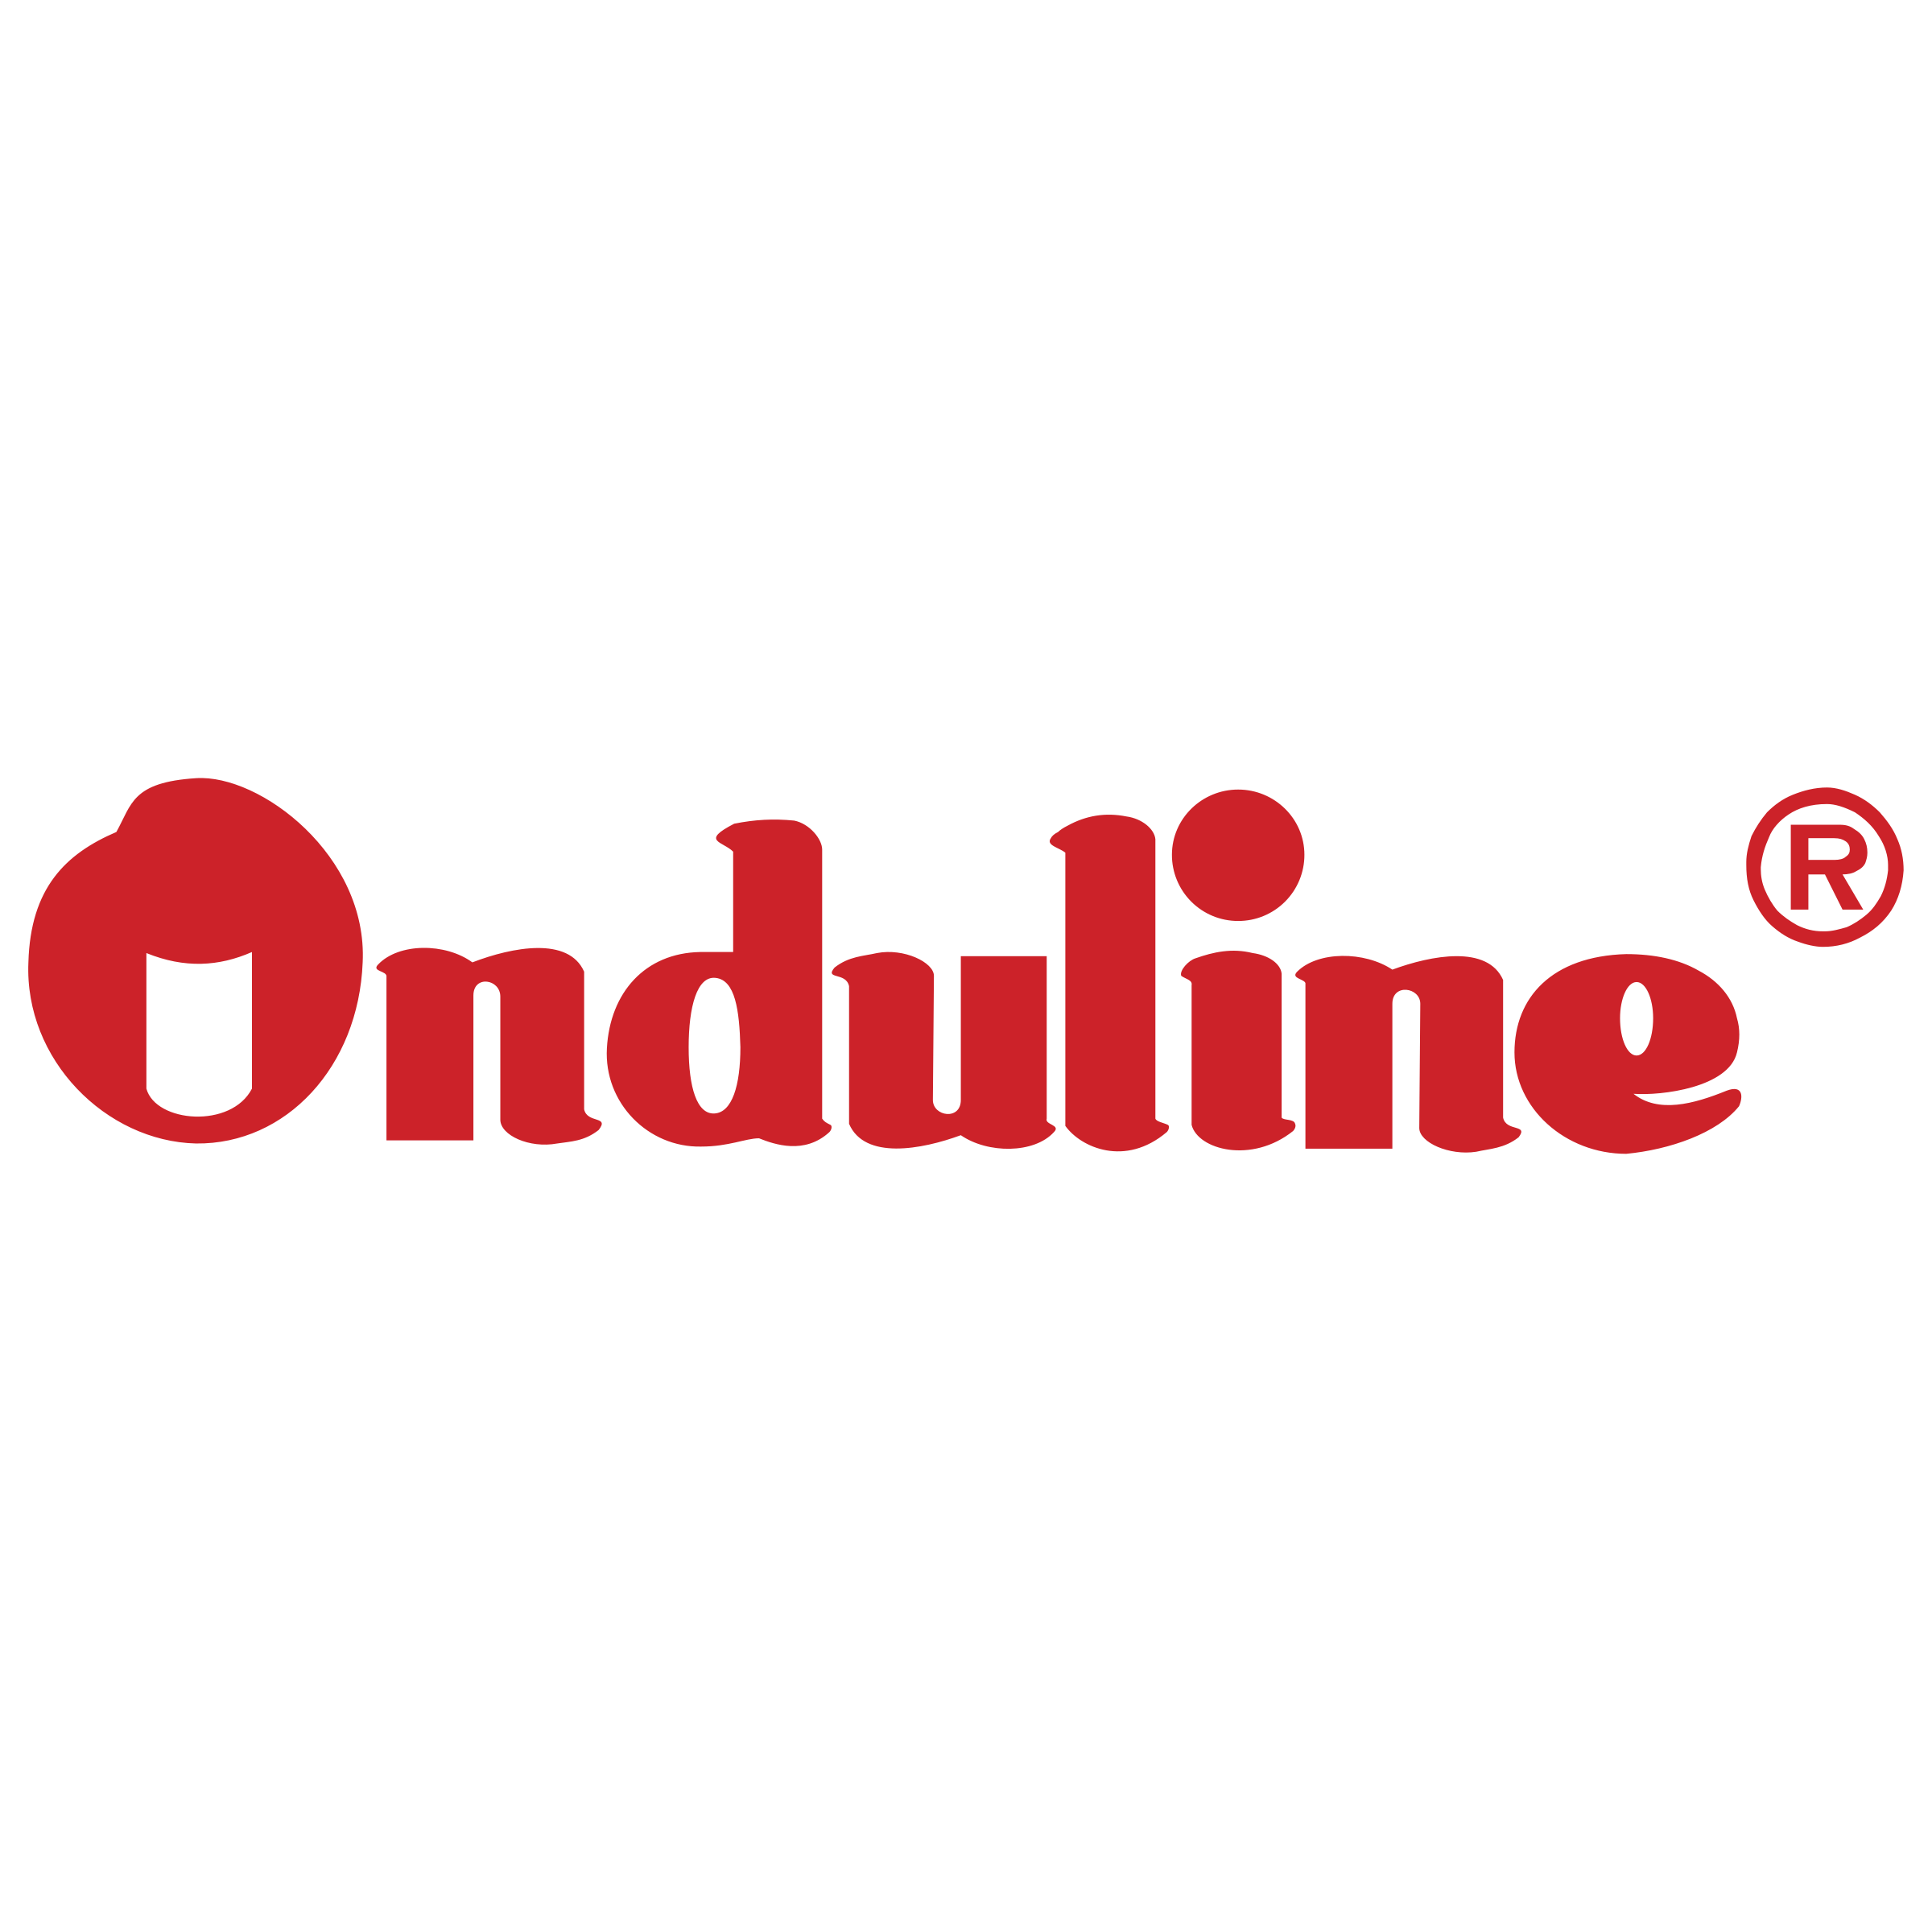 The logo of Onduline